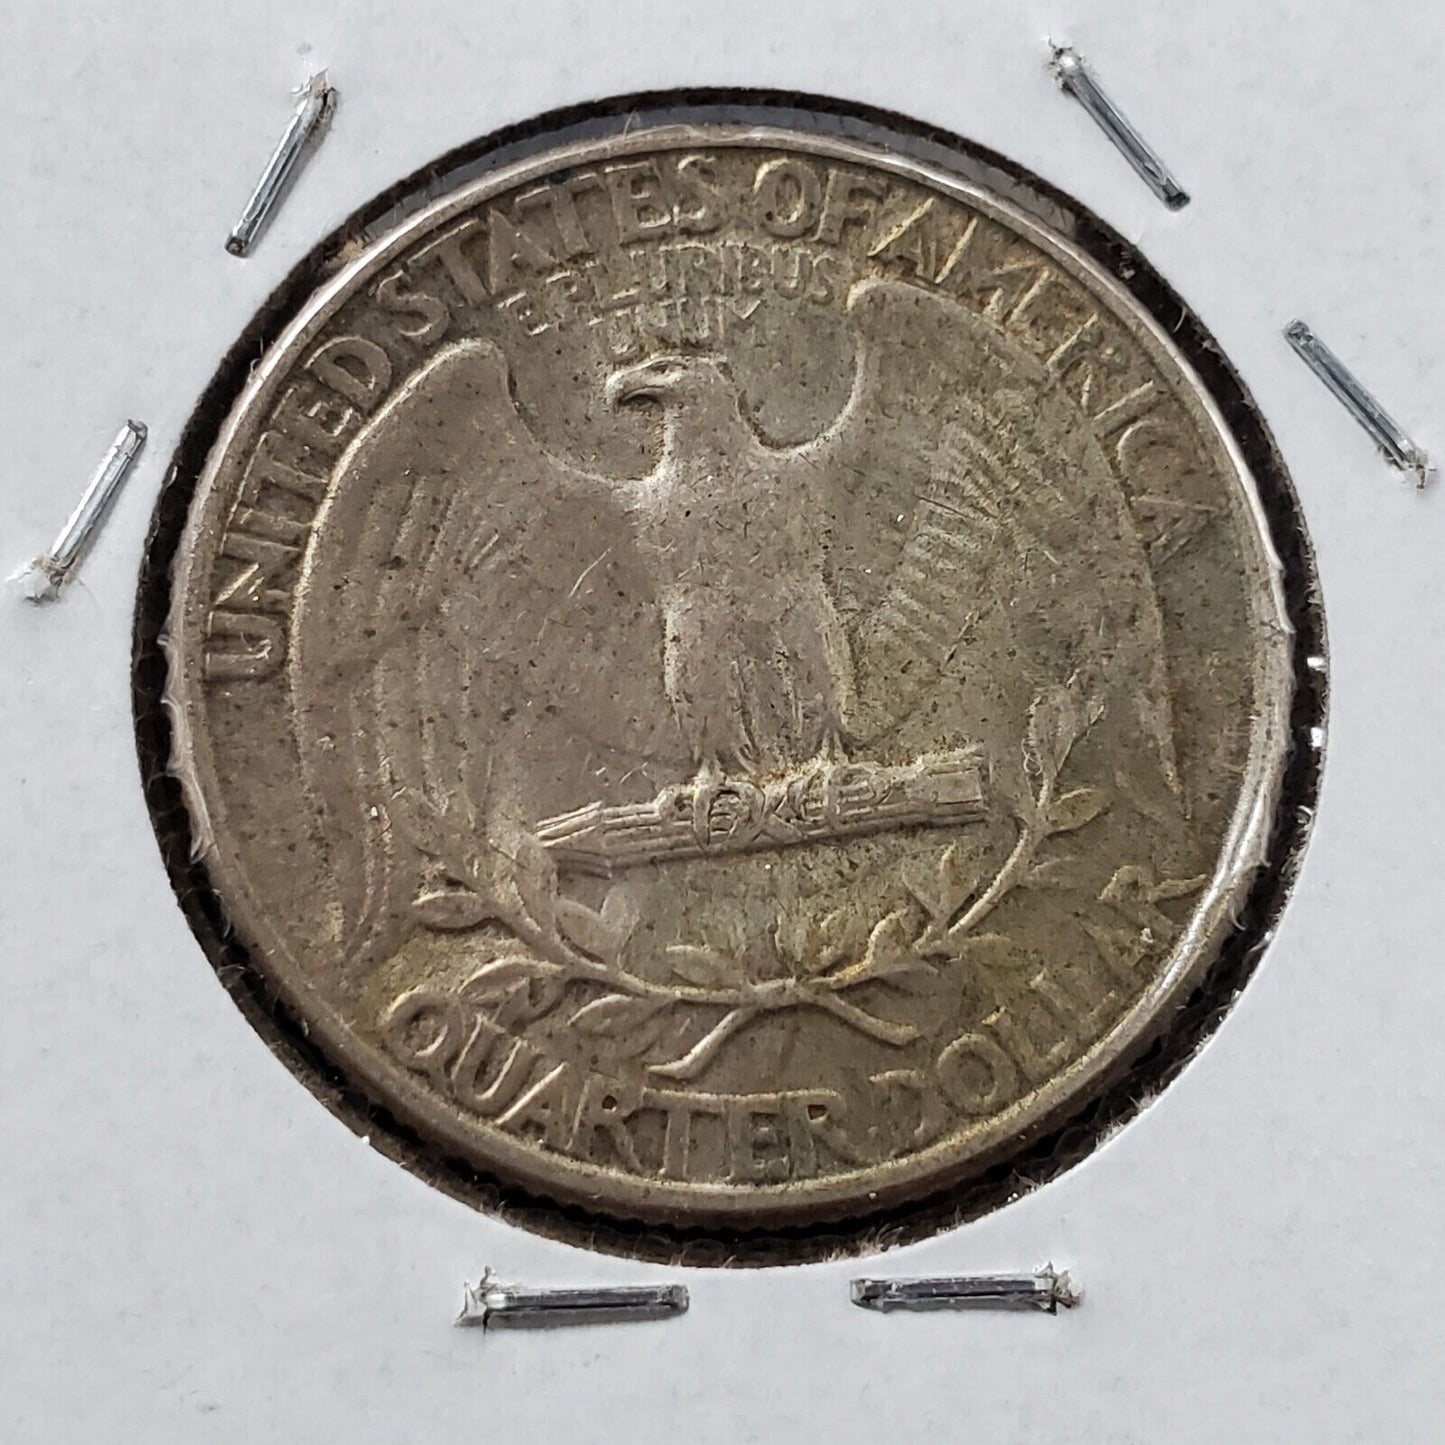 1932 P Washington Silver Quarter Coin AU About UNC FS-101 DDO Double Die Variety